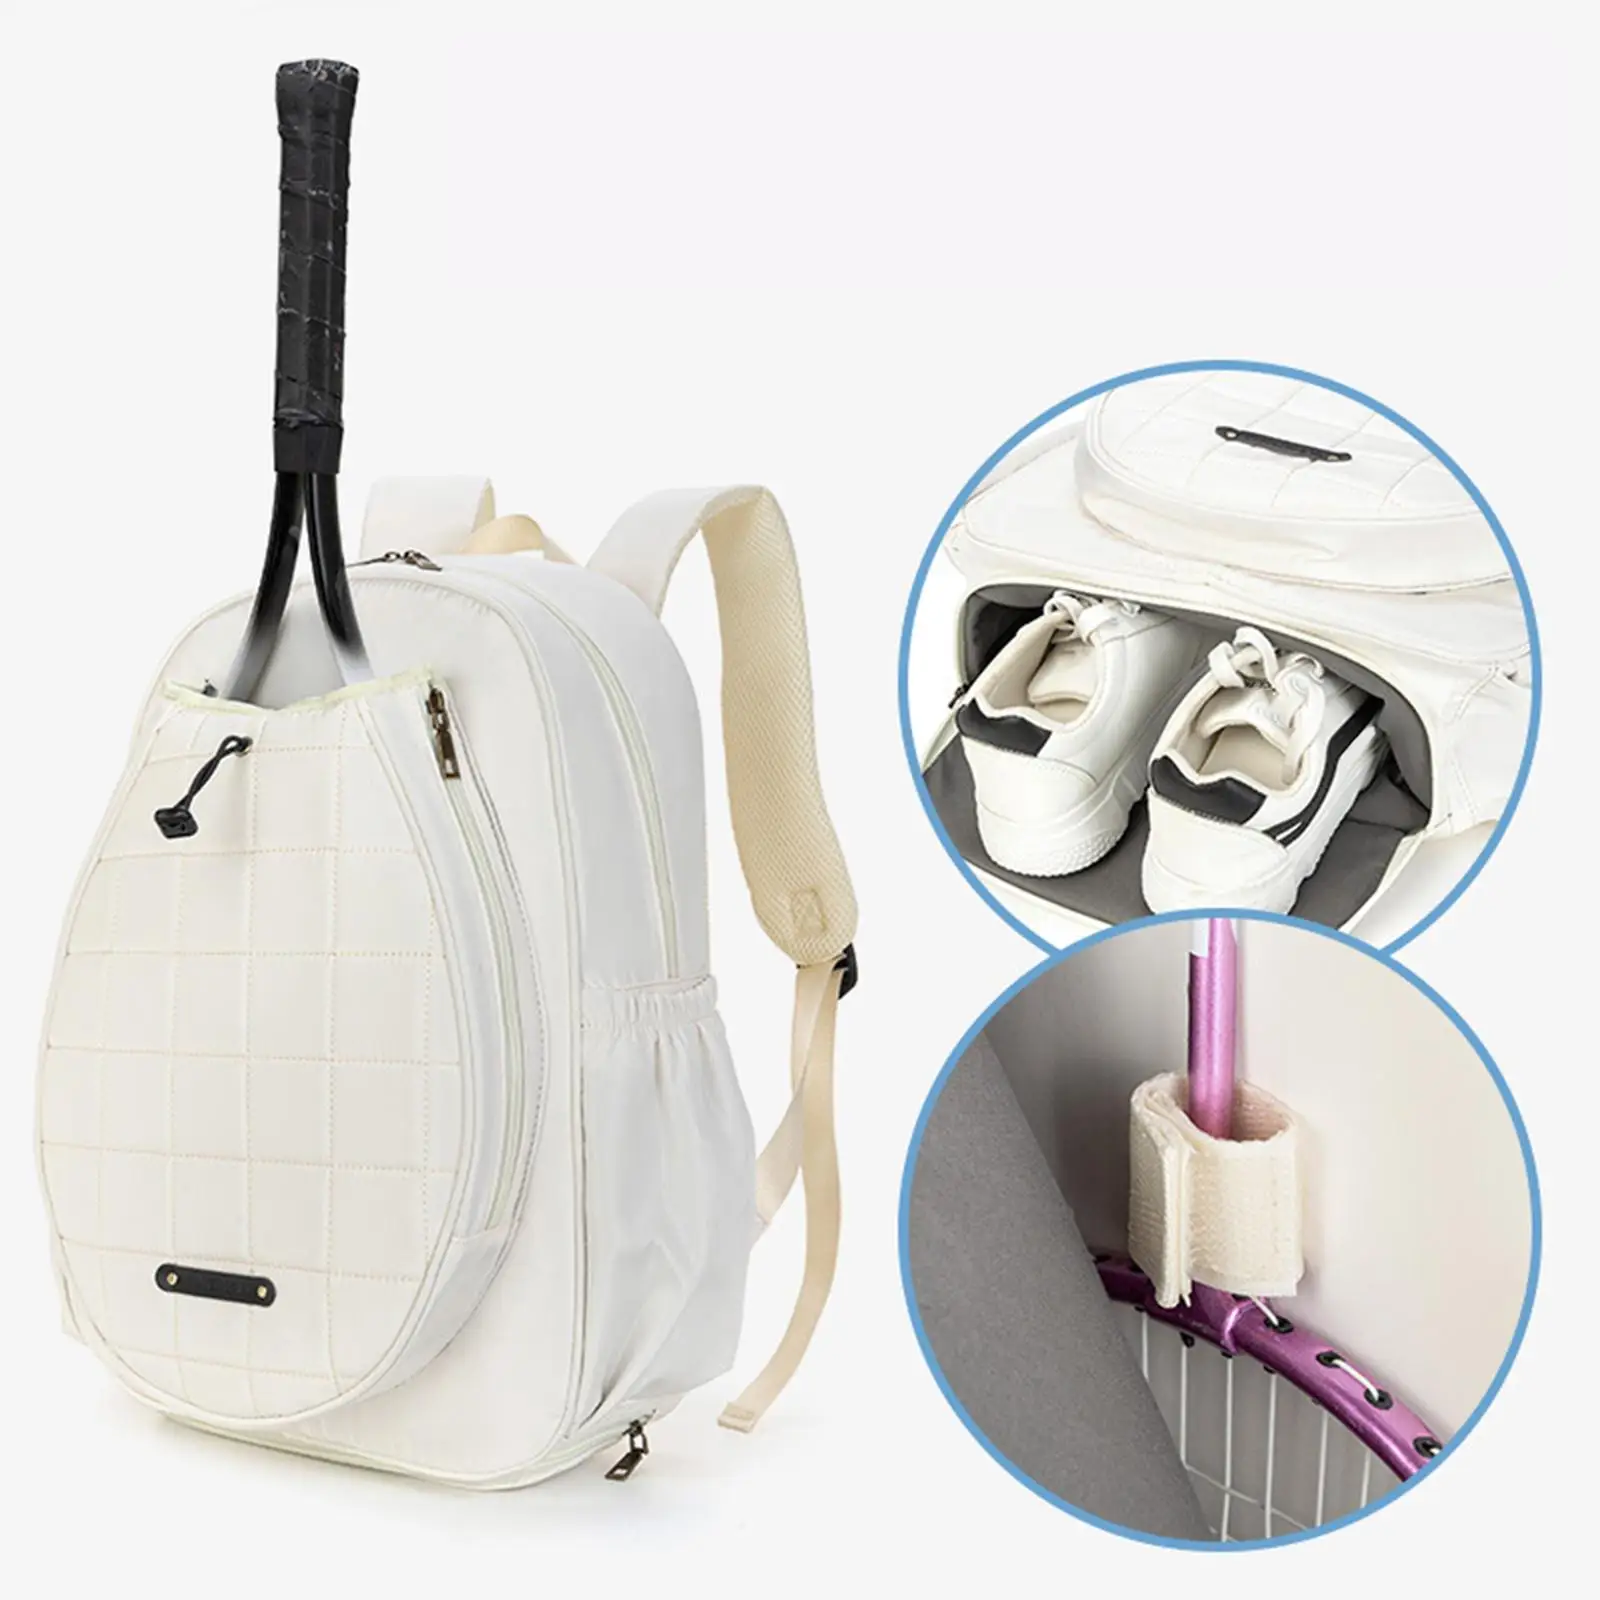 Tennis Backpack Tennis Bag Women Men Portable Multifunctional Sport Bag Tennis Racket Bag for Tennis Racket Balls Accessories